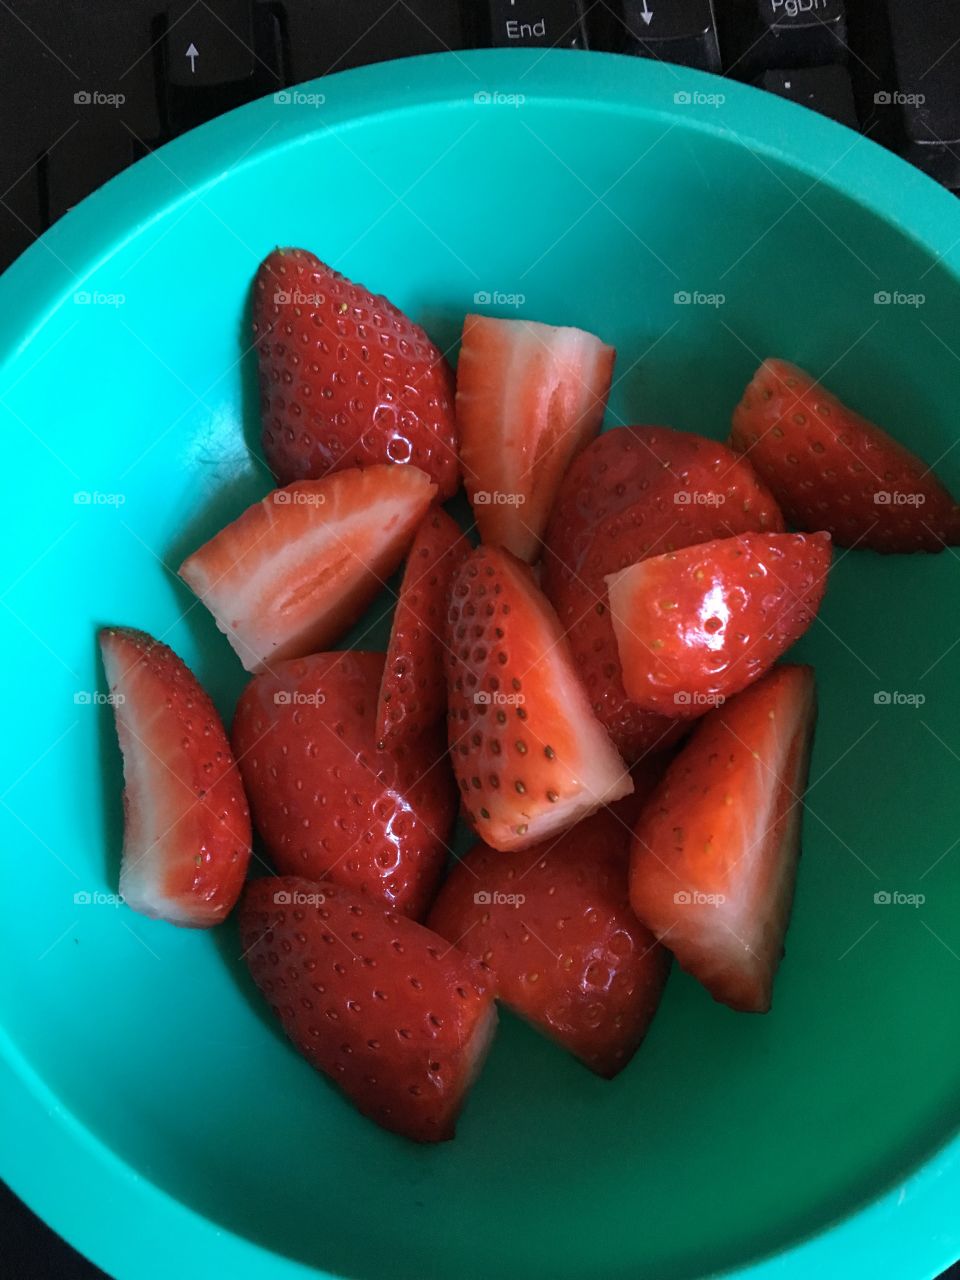 Strawberries, so good. 